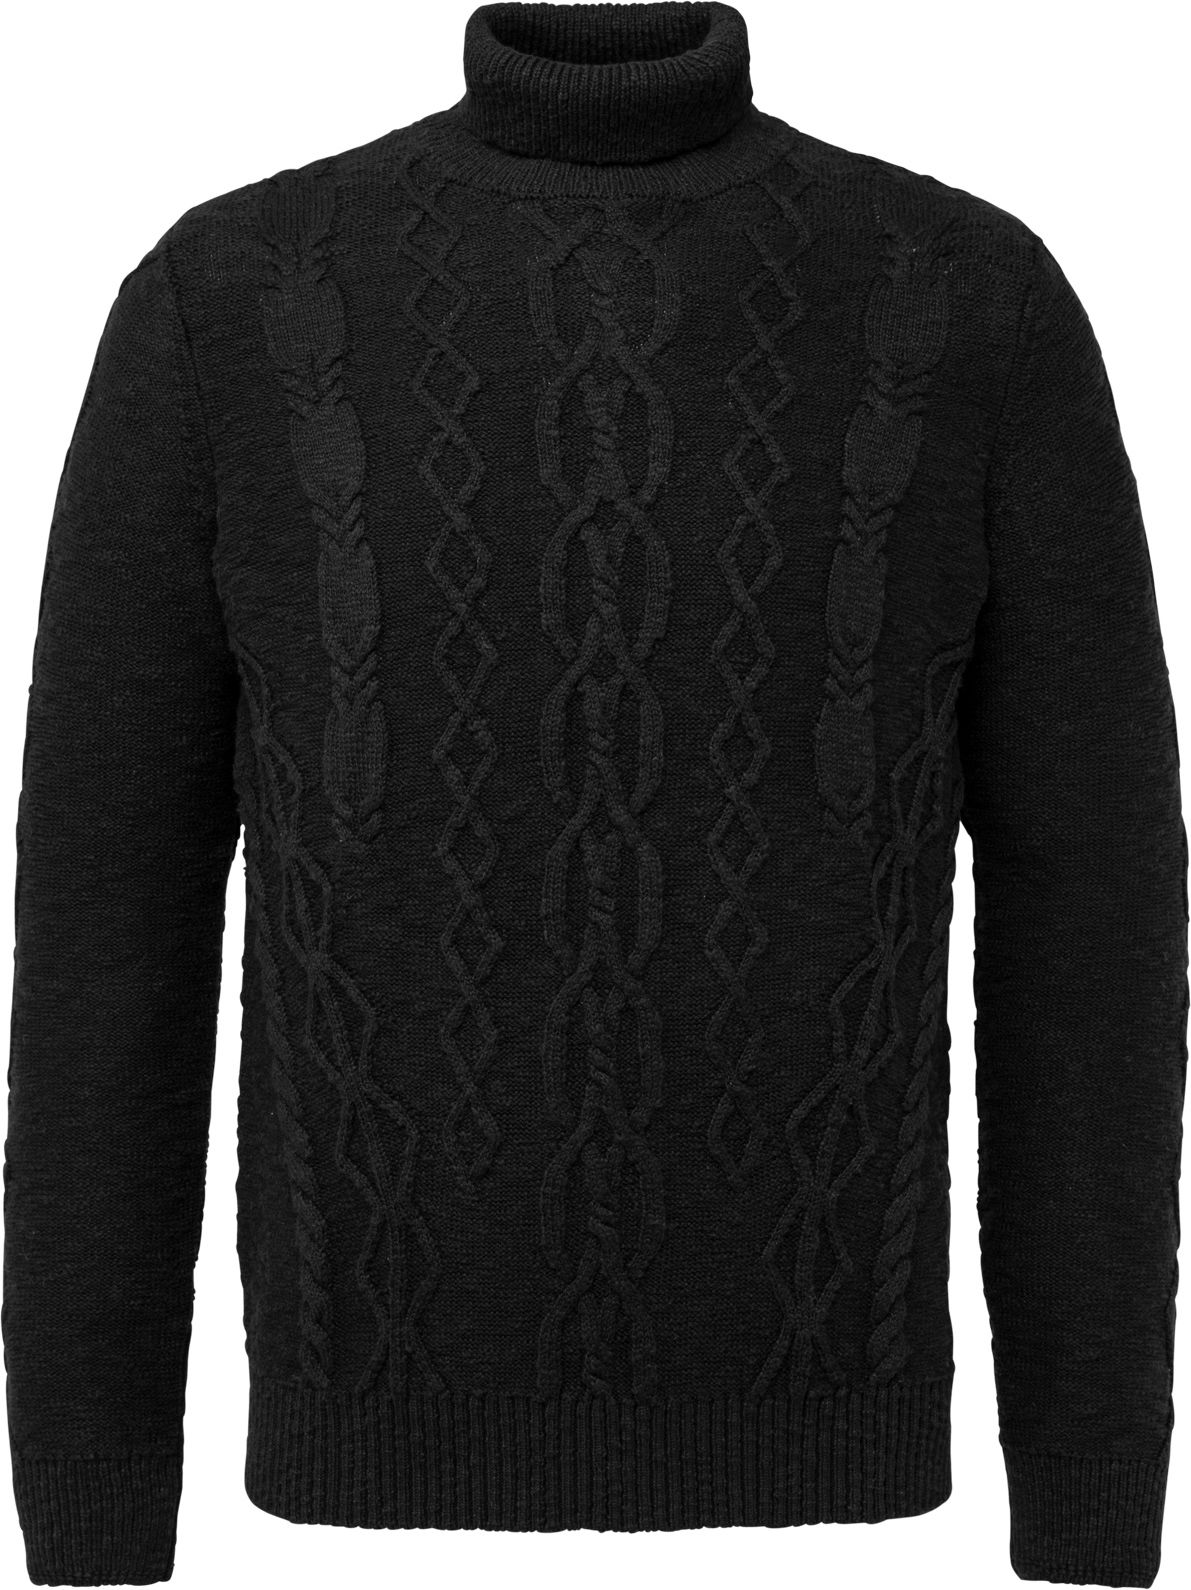 PME Legend Turtleneck Knitted Slub Black size L